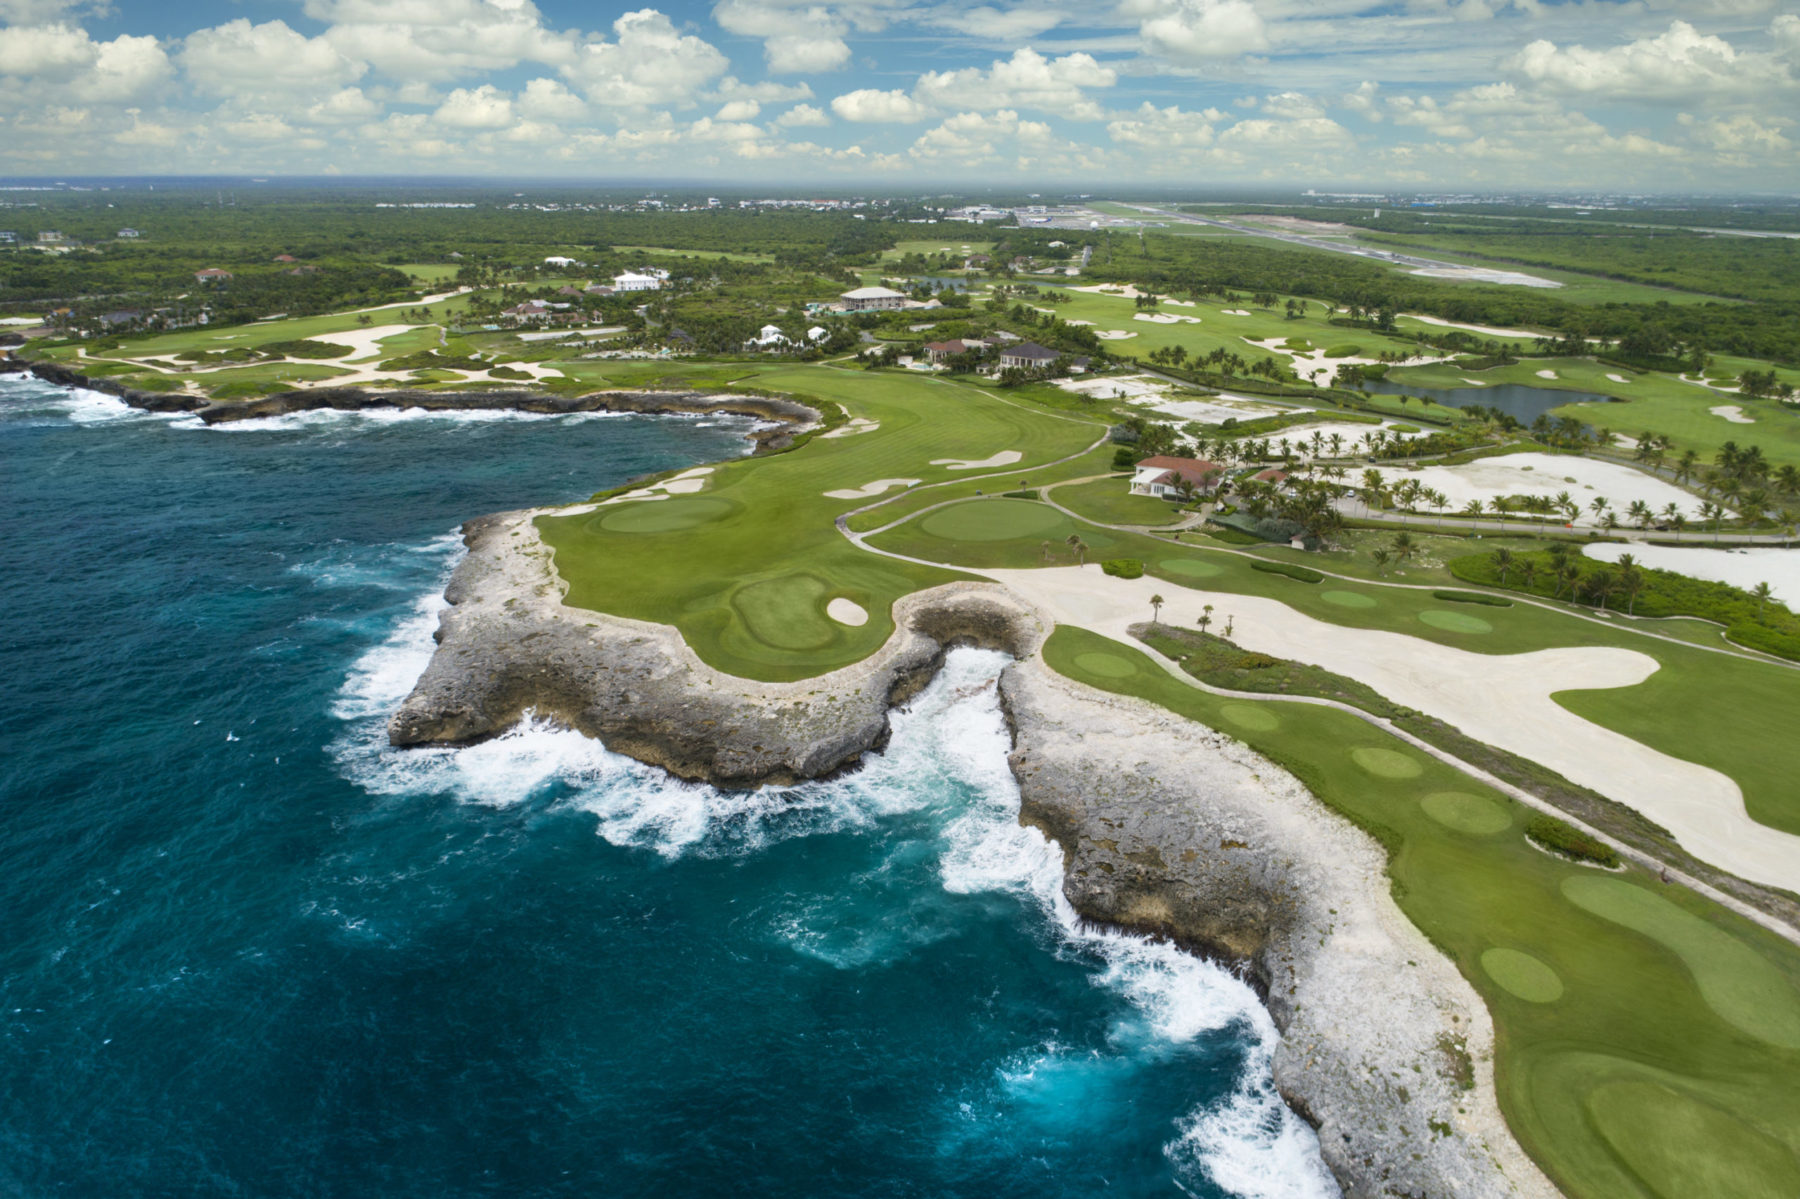 Corales Golf Clubin Punta Cana Travel Dreams Magazine Travel Dreams